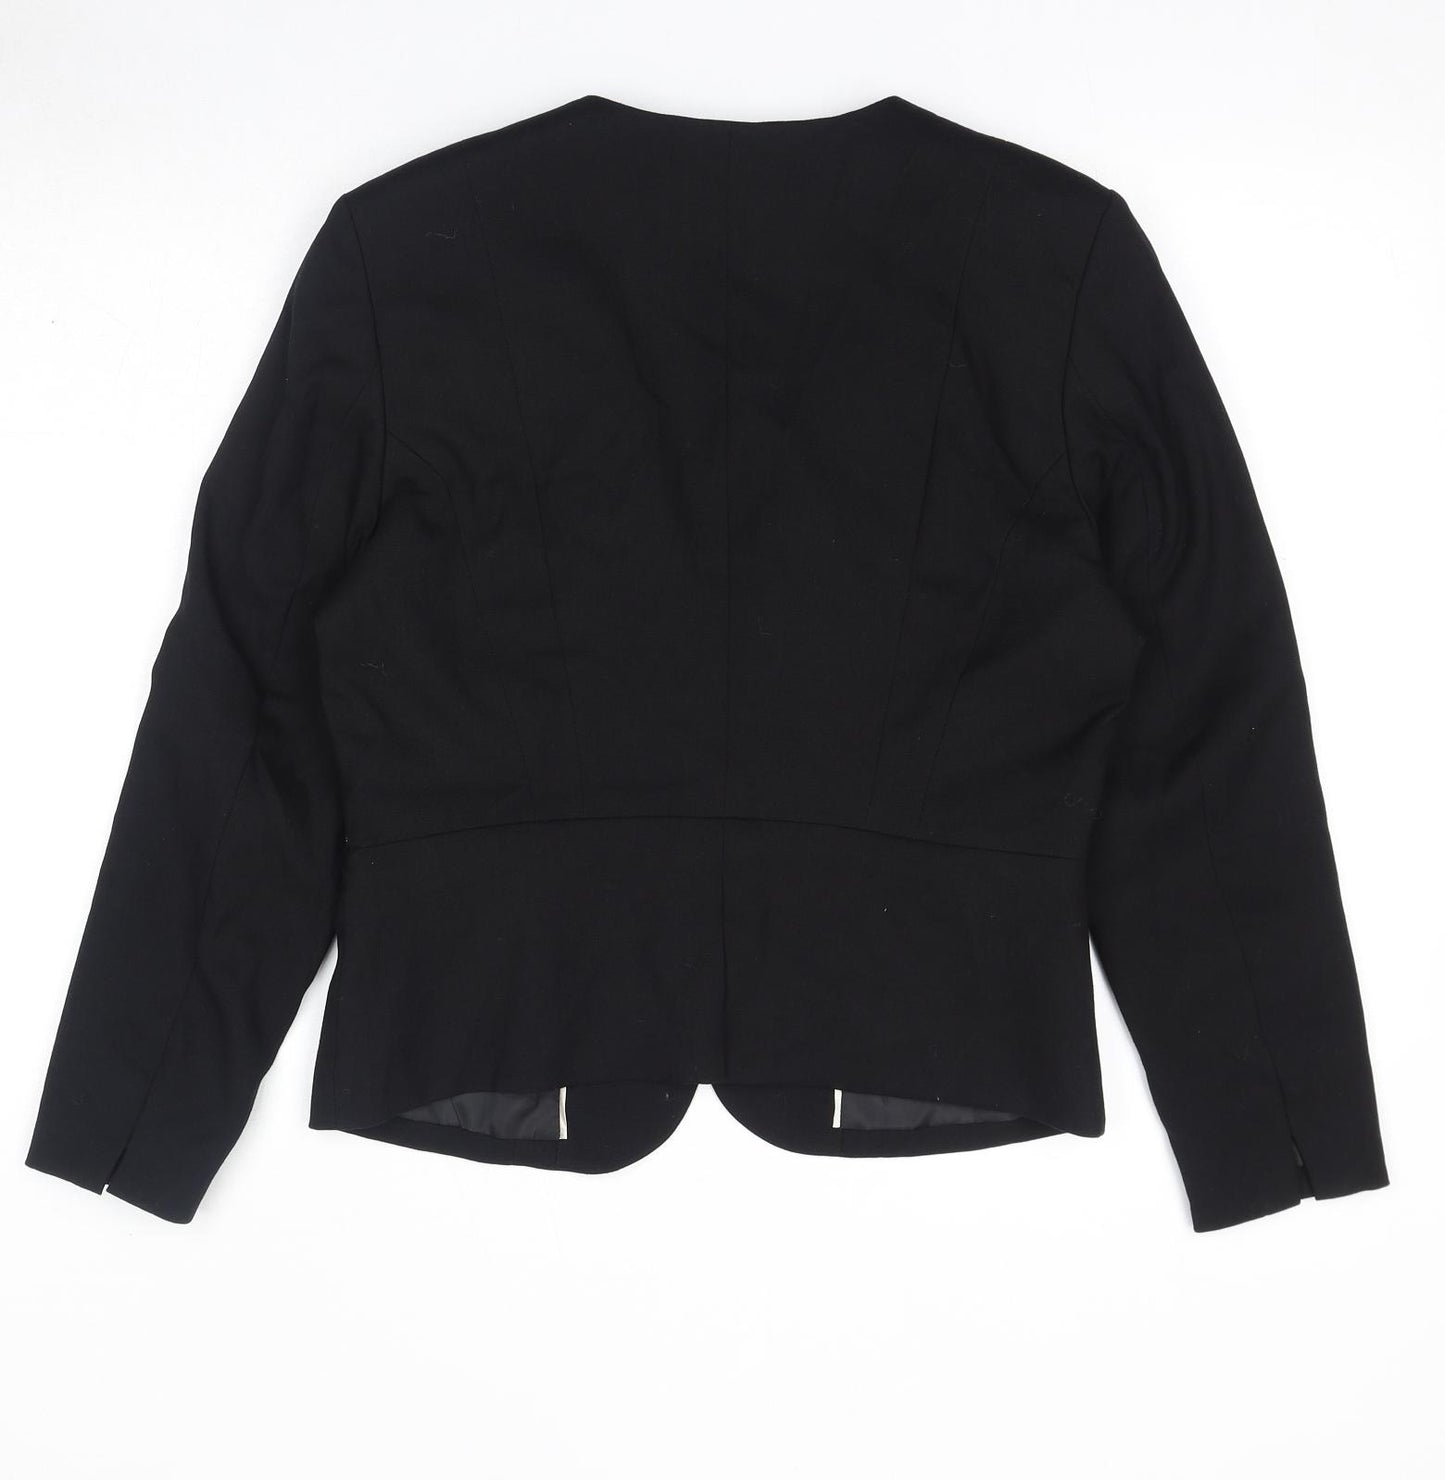 H&M Womens Black Jacket Blazer Size 14